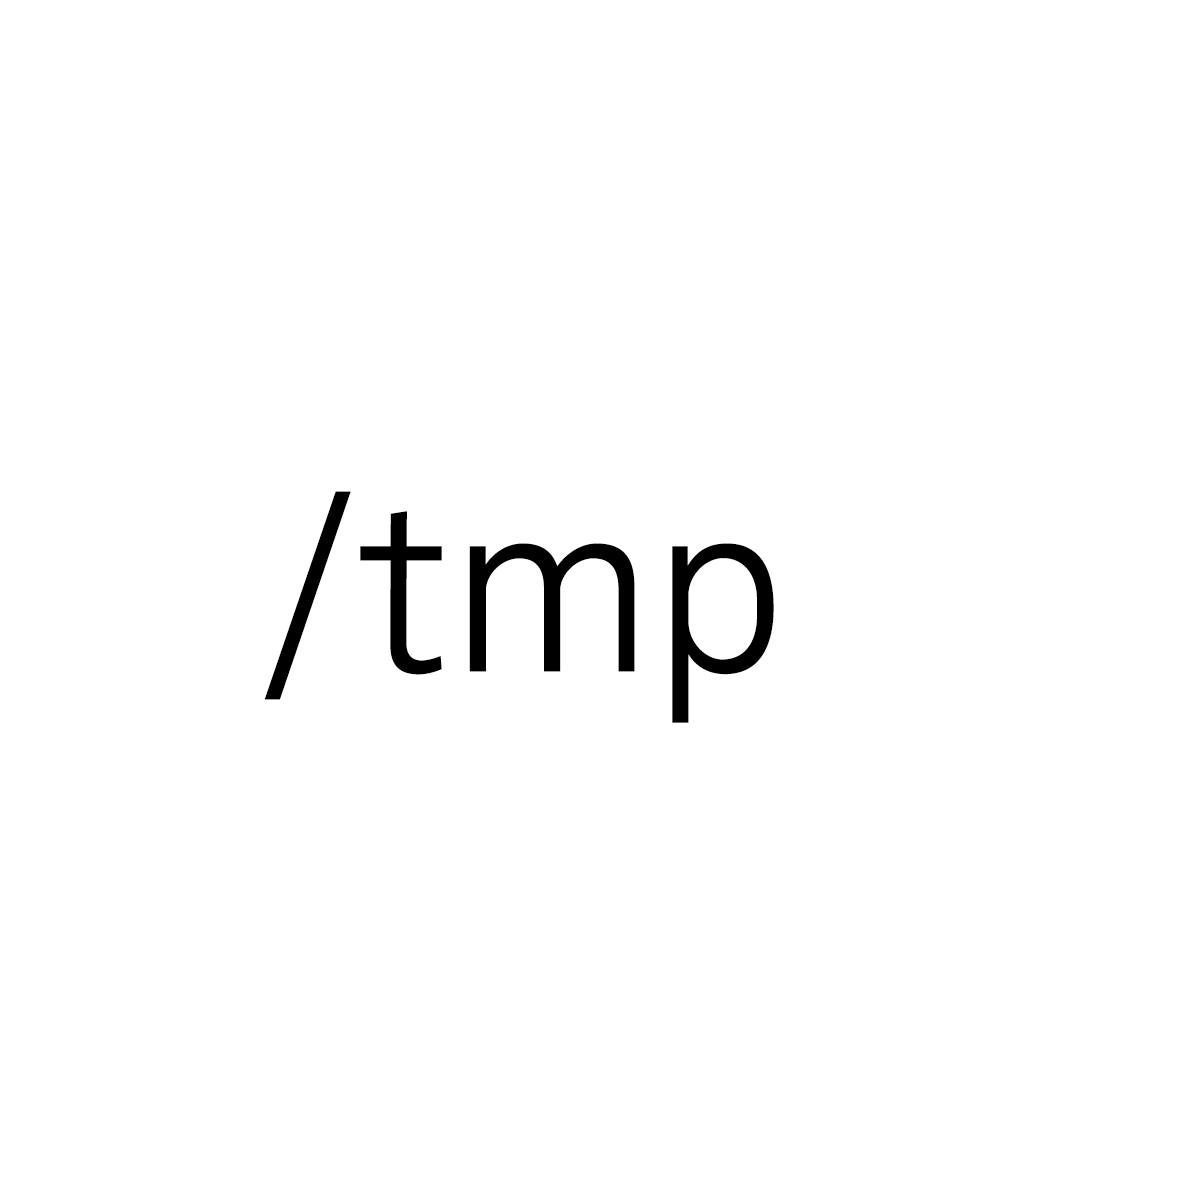 /tmp